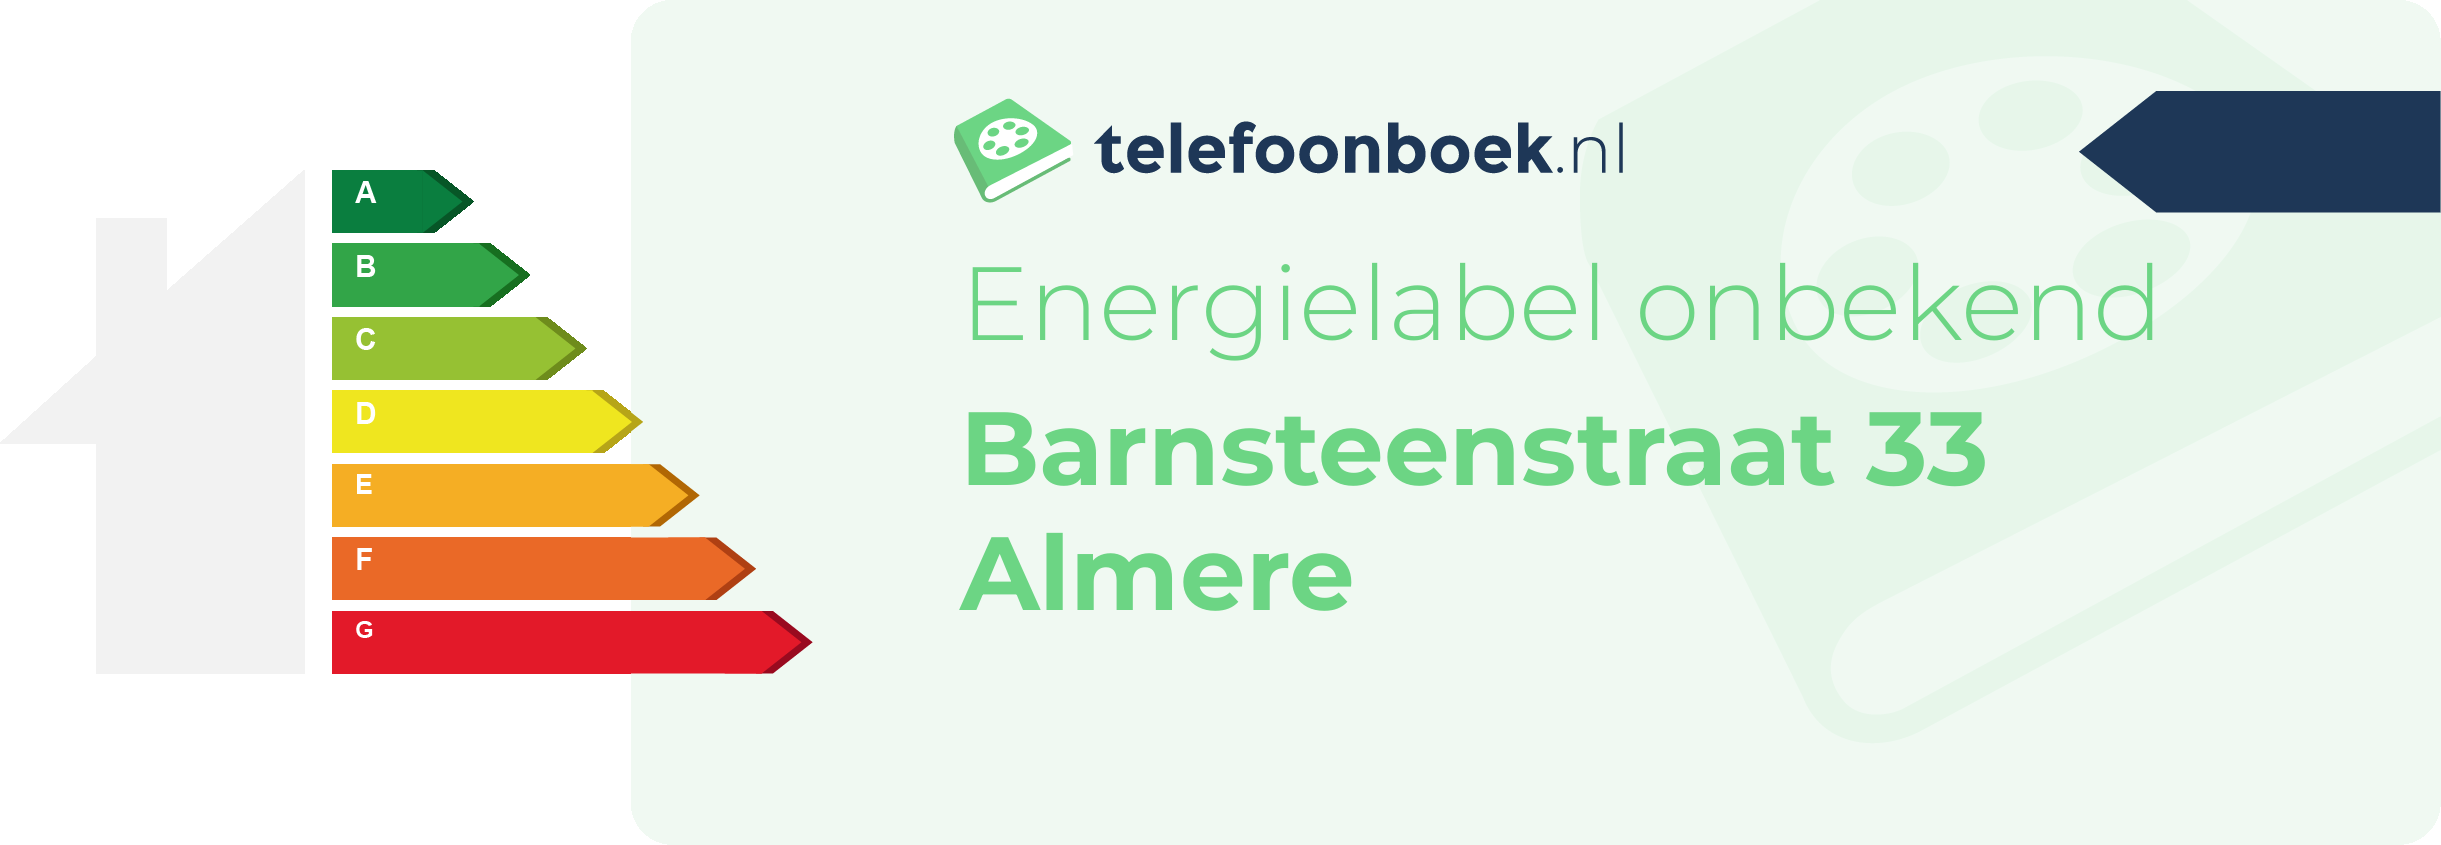 Energielabel Barnsteenstraat 33 Almere